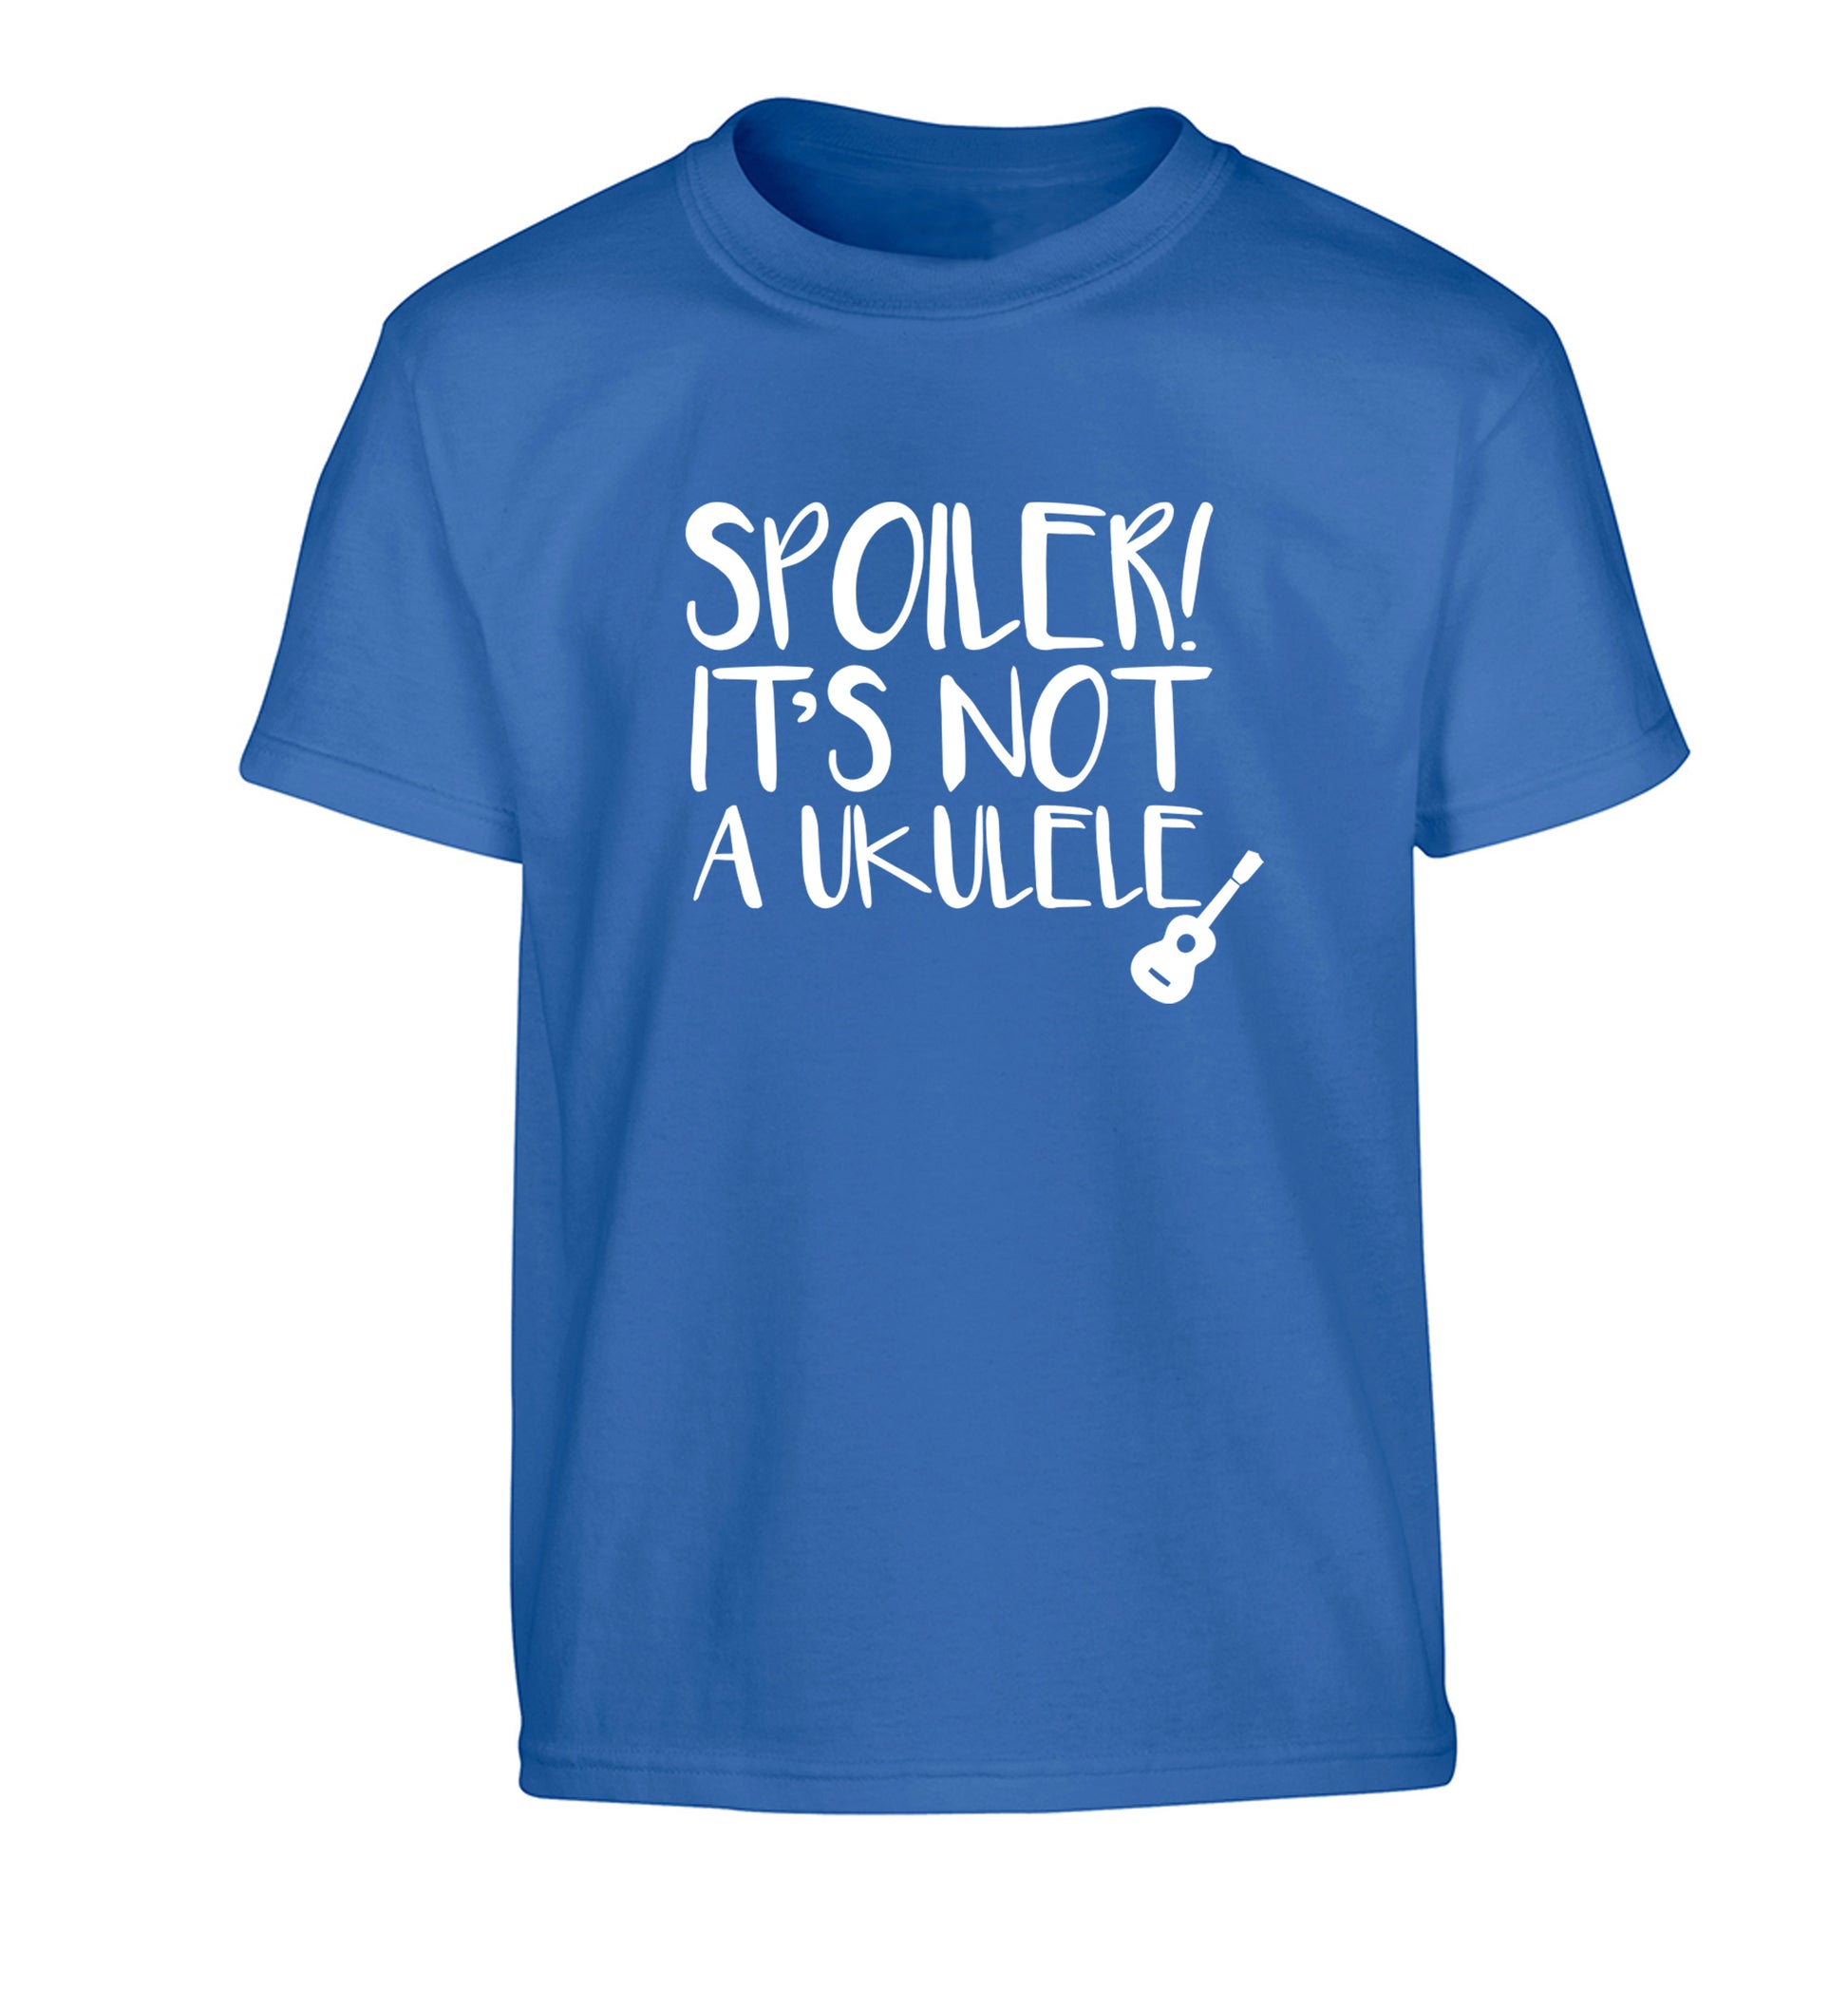 Spoiler it's not a ukulele Children's blue Tshirt 12-13 Years